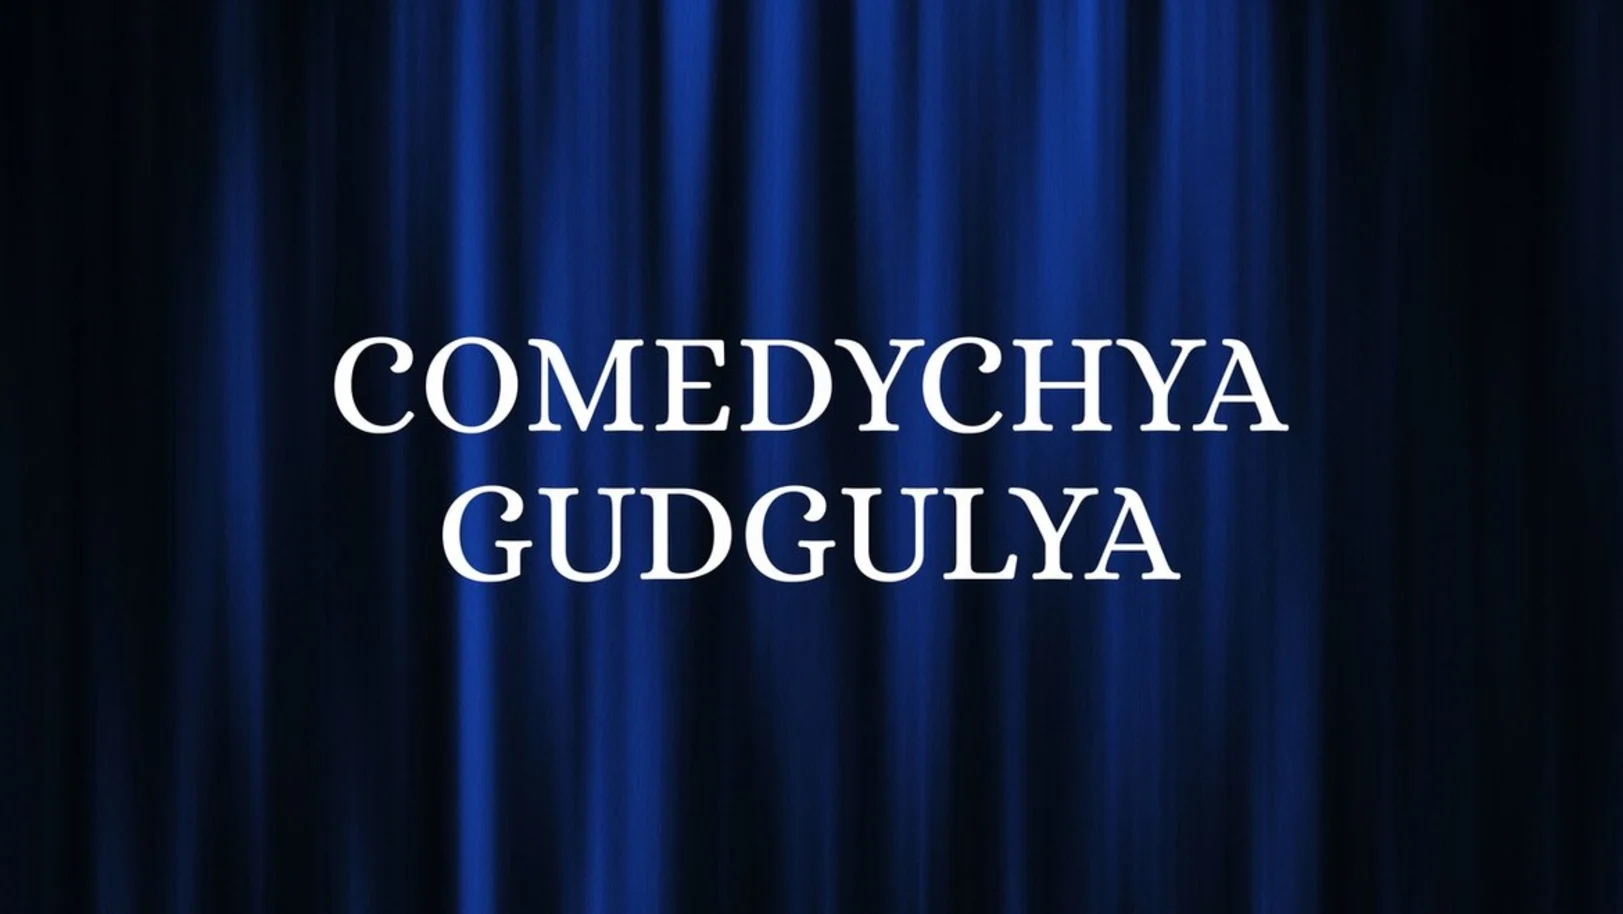 Comedychya Gudgulya Streaming Now On Zee Talkies HD